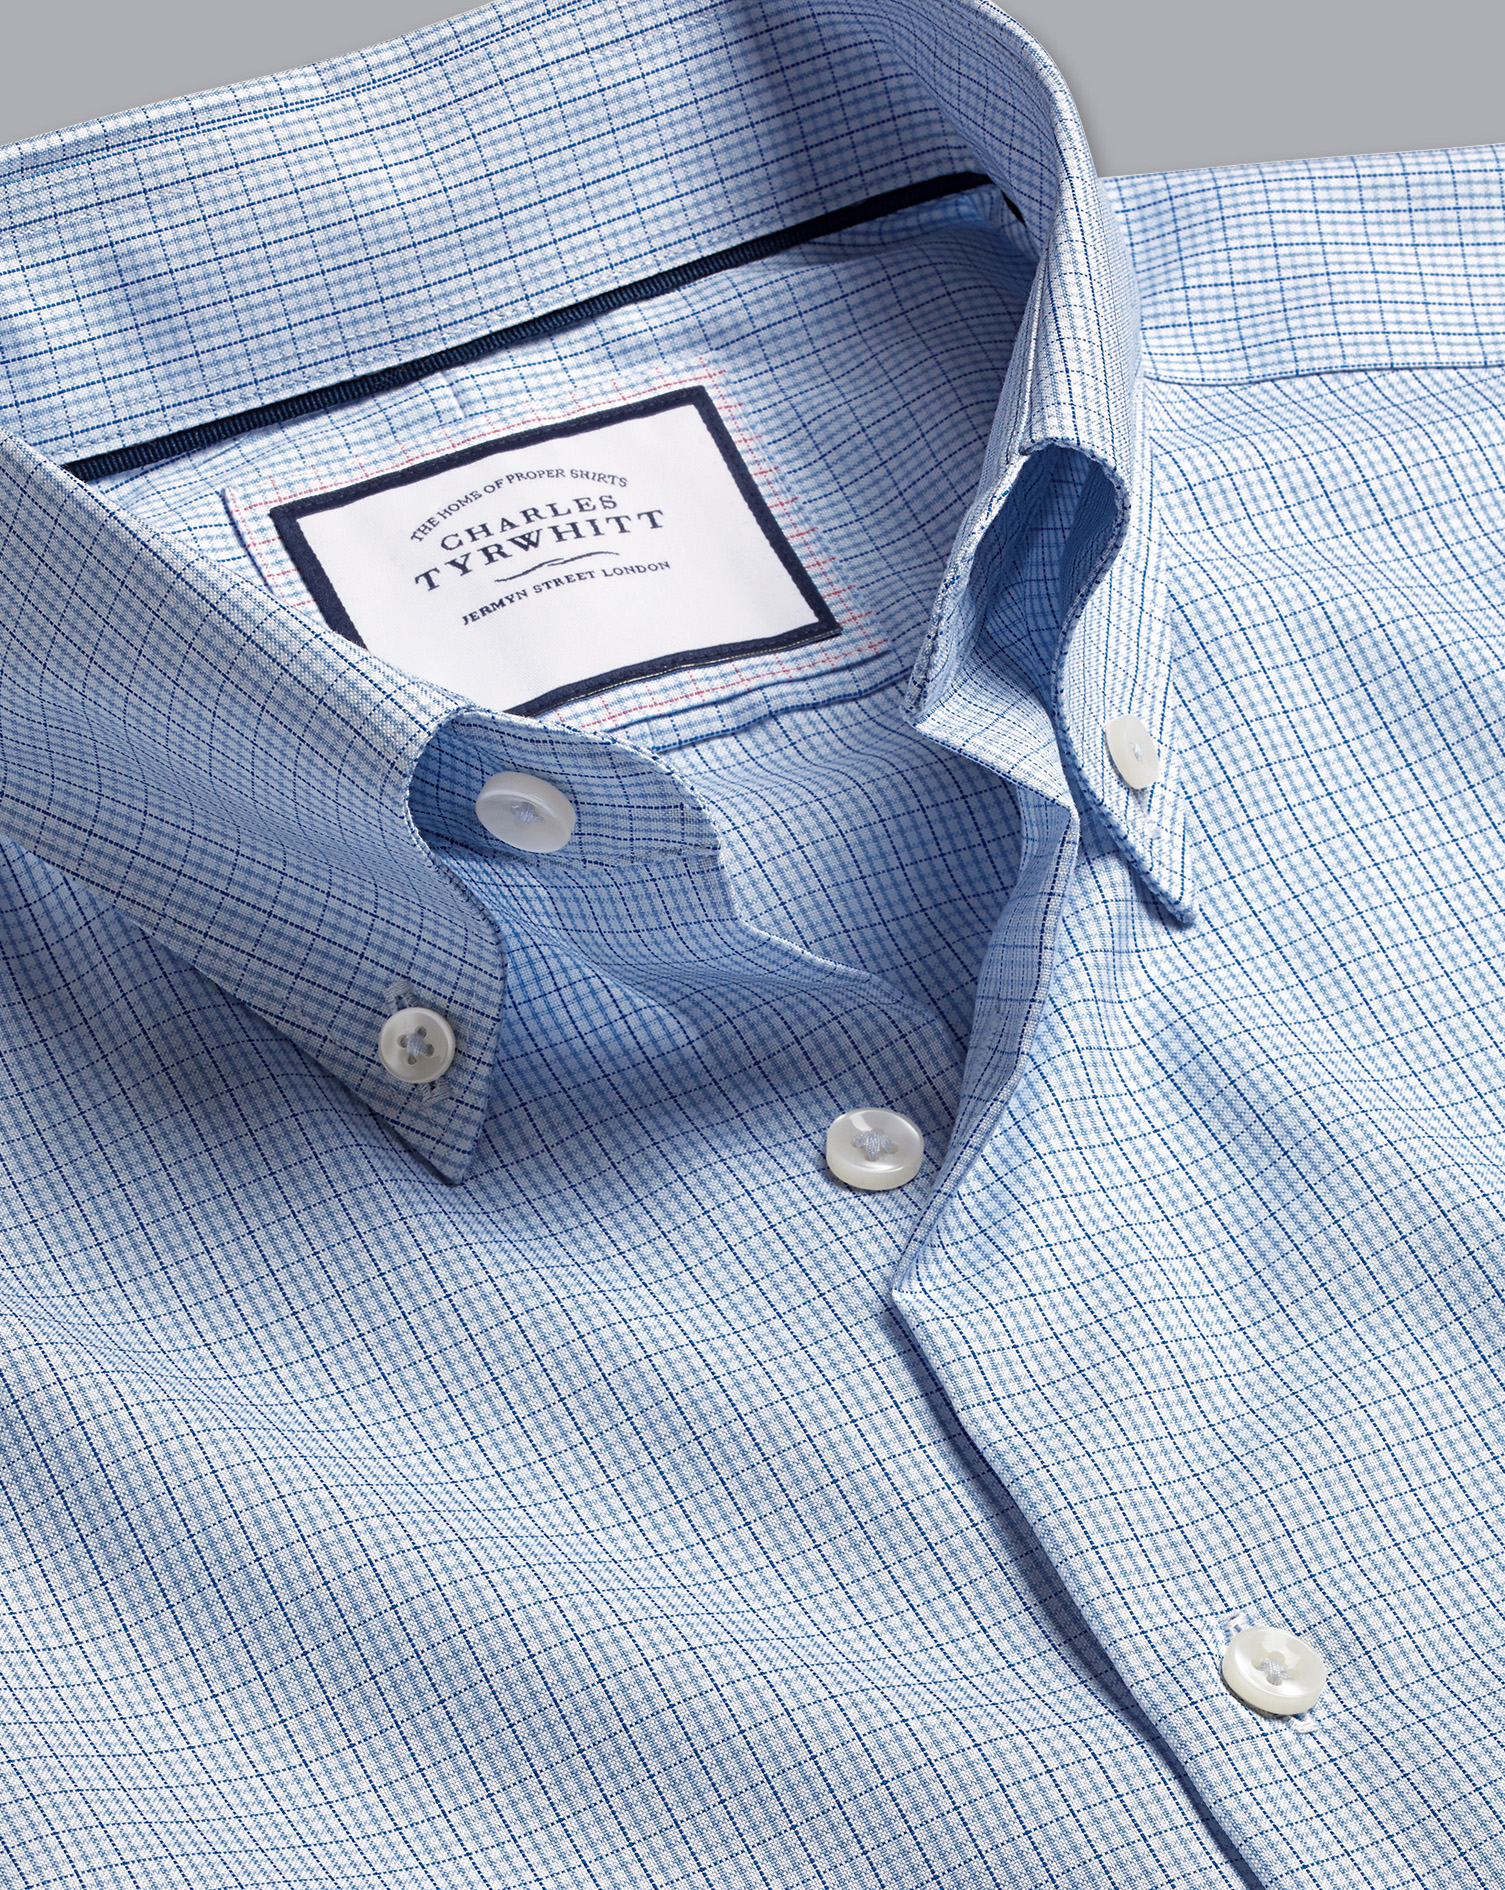 Men's Charles Tyrwhitt Button-Down Collar Non-Iron Check Dress Shirt - Sky Blue Single Cuff Size Sma